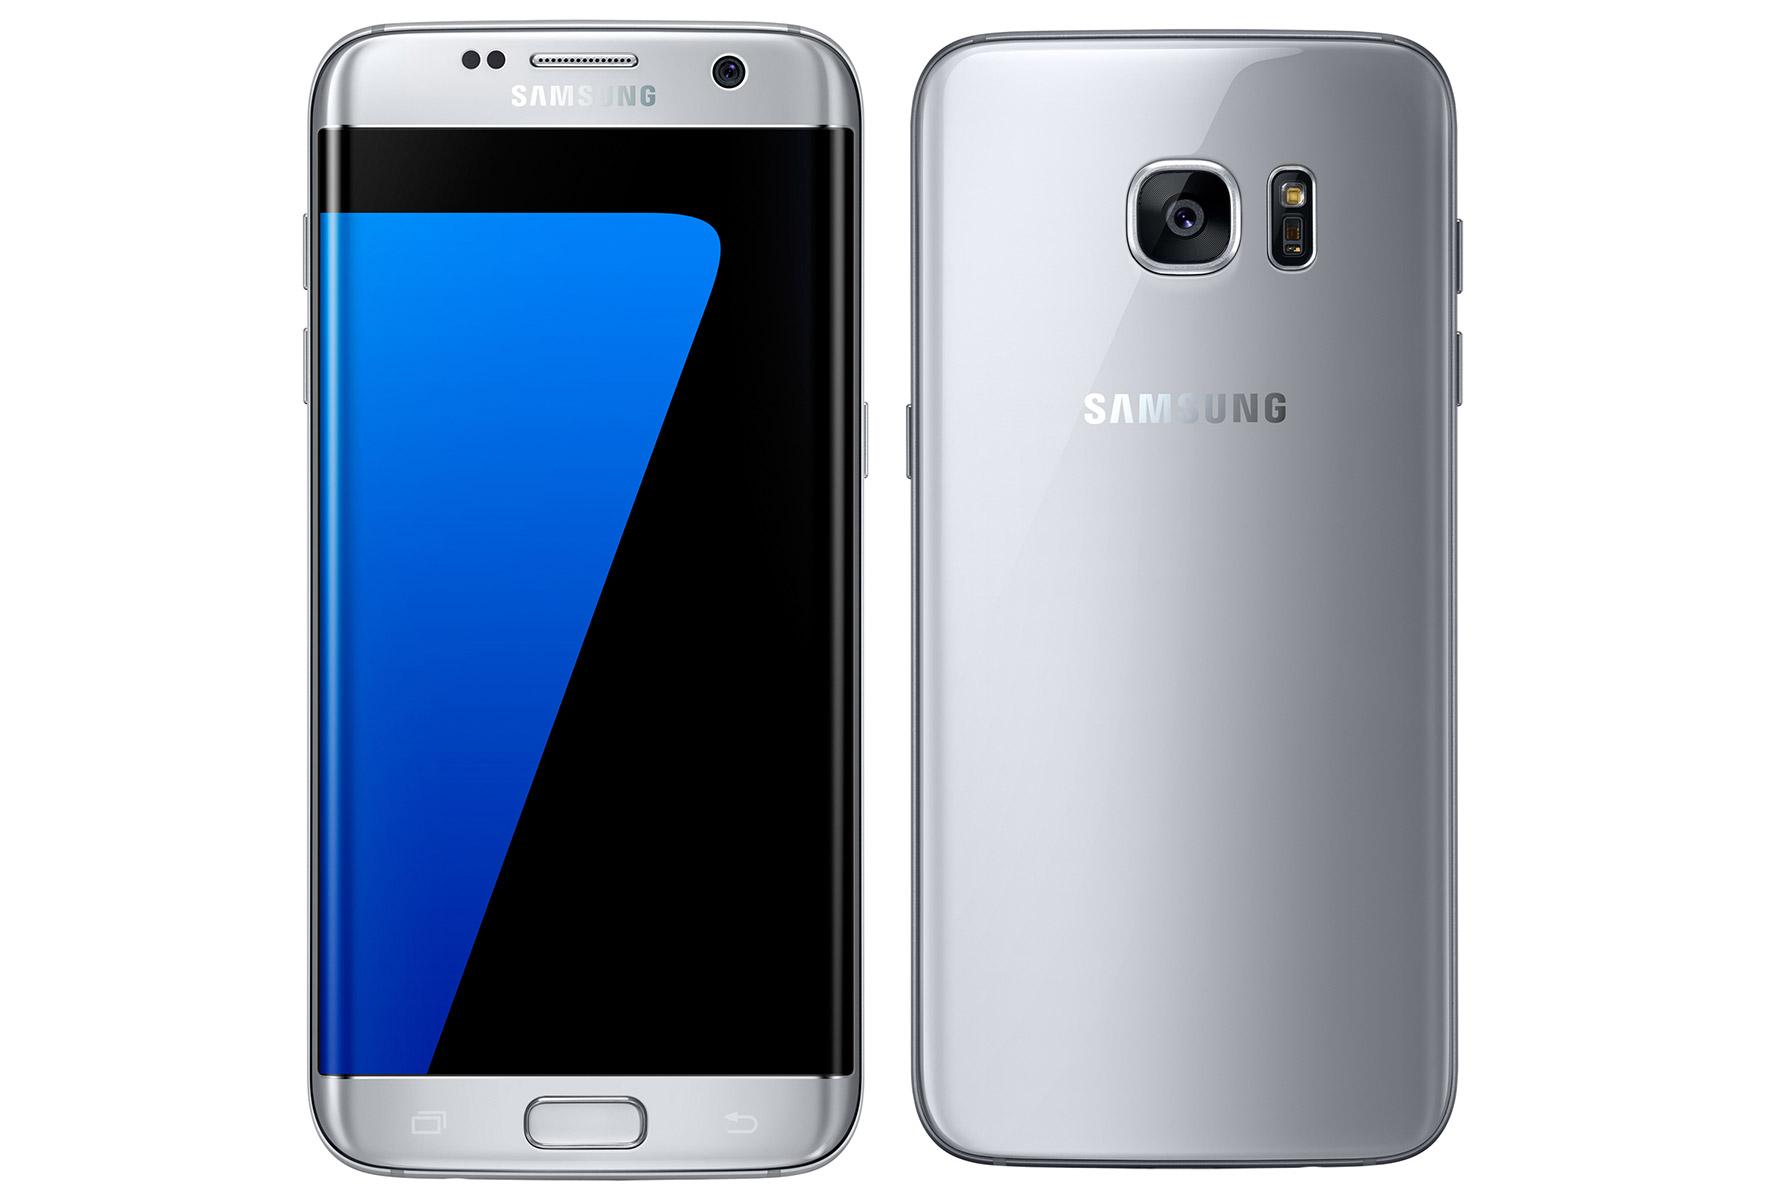 Samsung Galaxy S7 Edge India Price